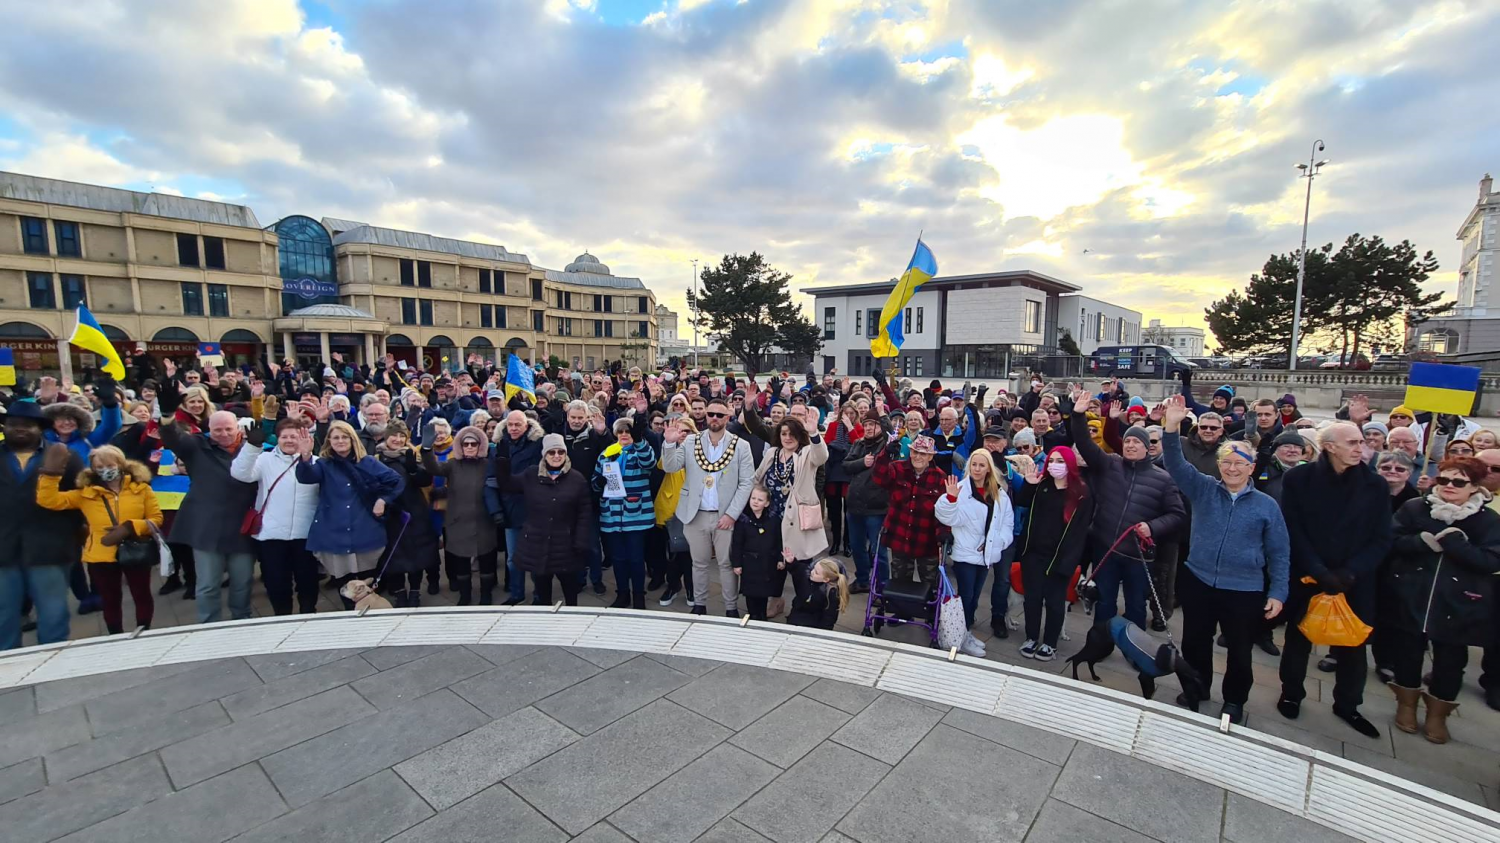 Churches Together including Locking Castle Church vigil for Ukraine in Weston-super-Mare